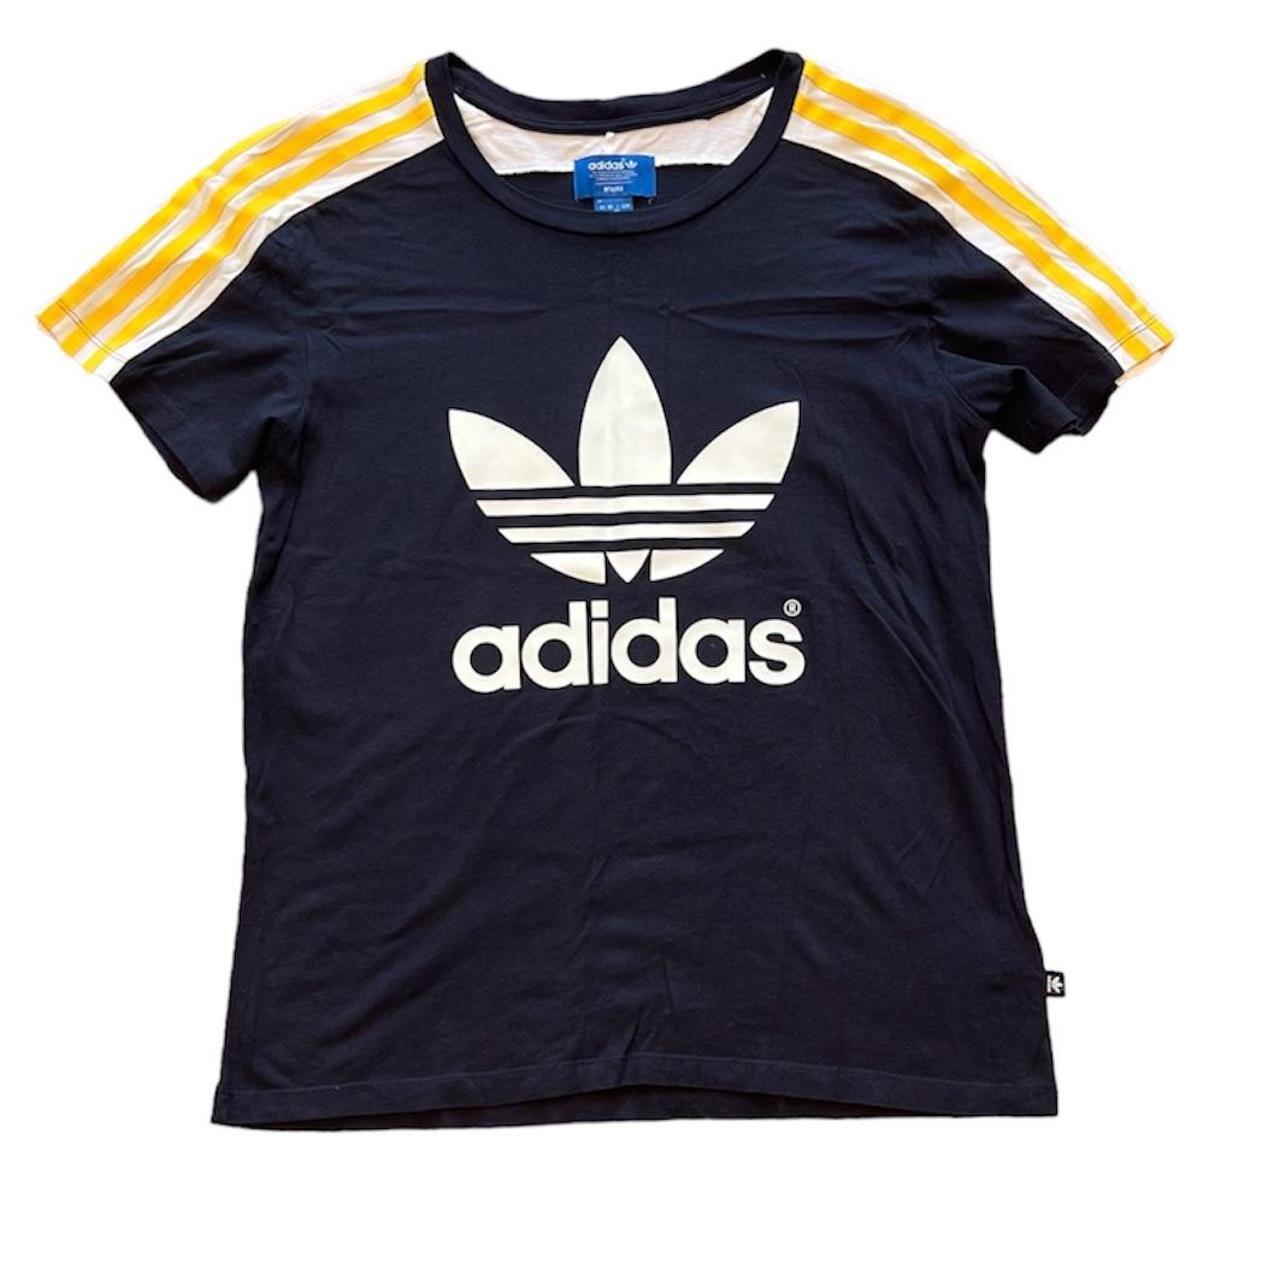 Adidas Originals x Rita Ora T-Shirt Size 10 Pit to... - Depop